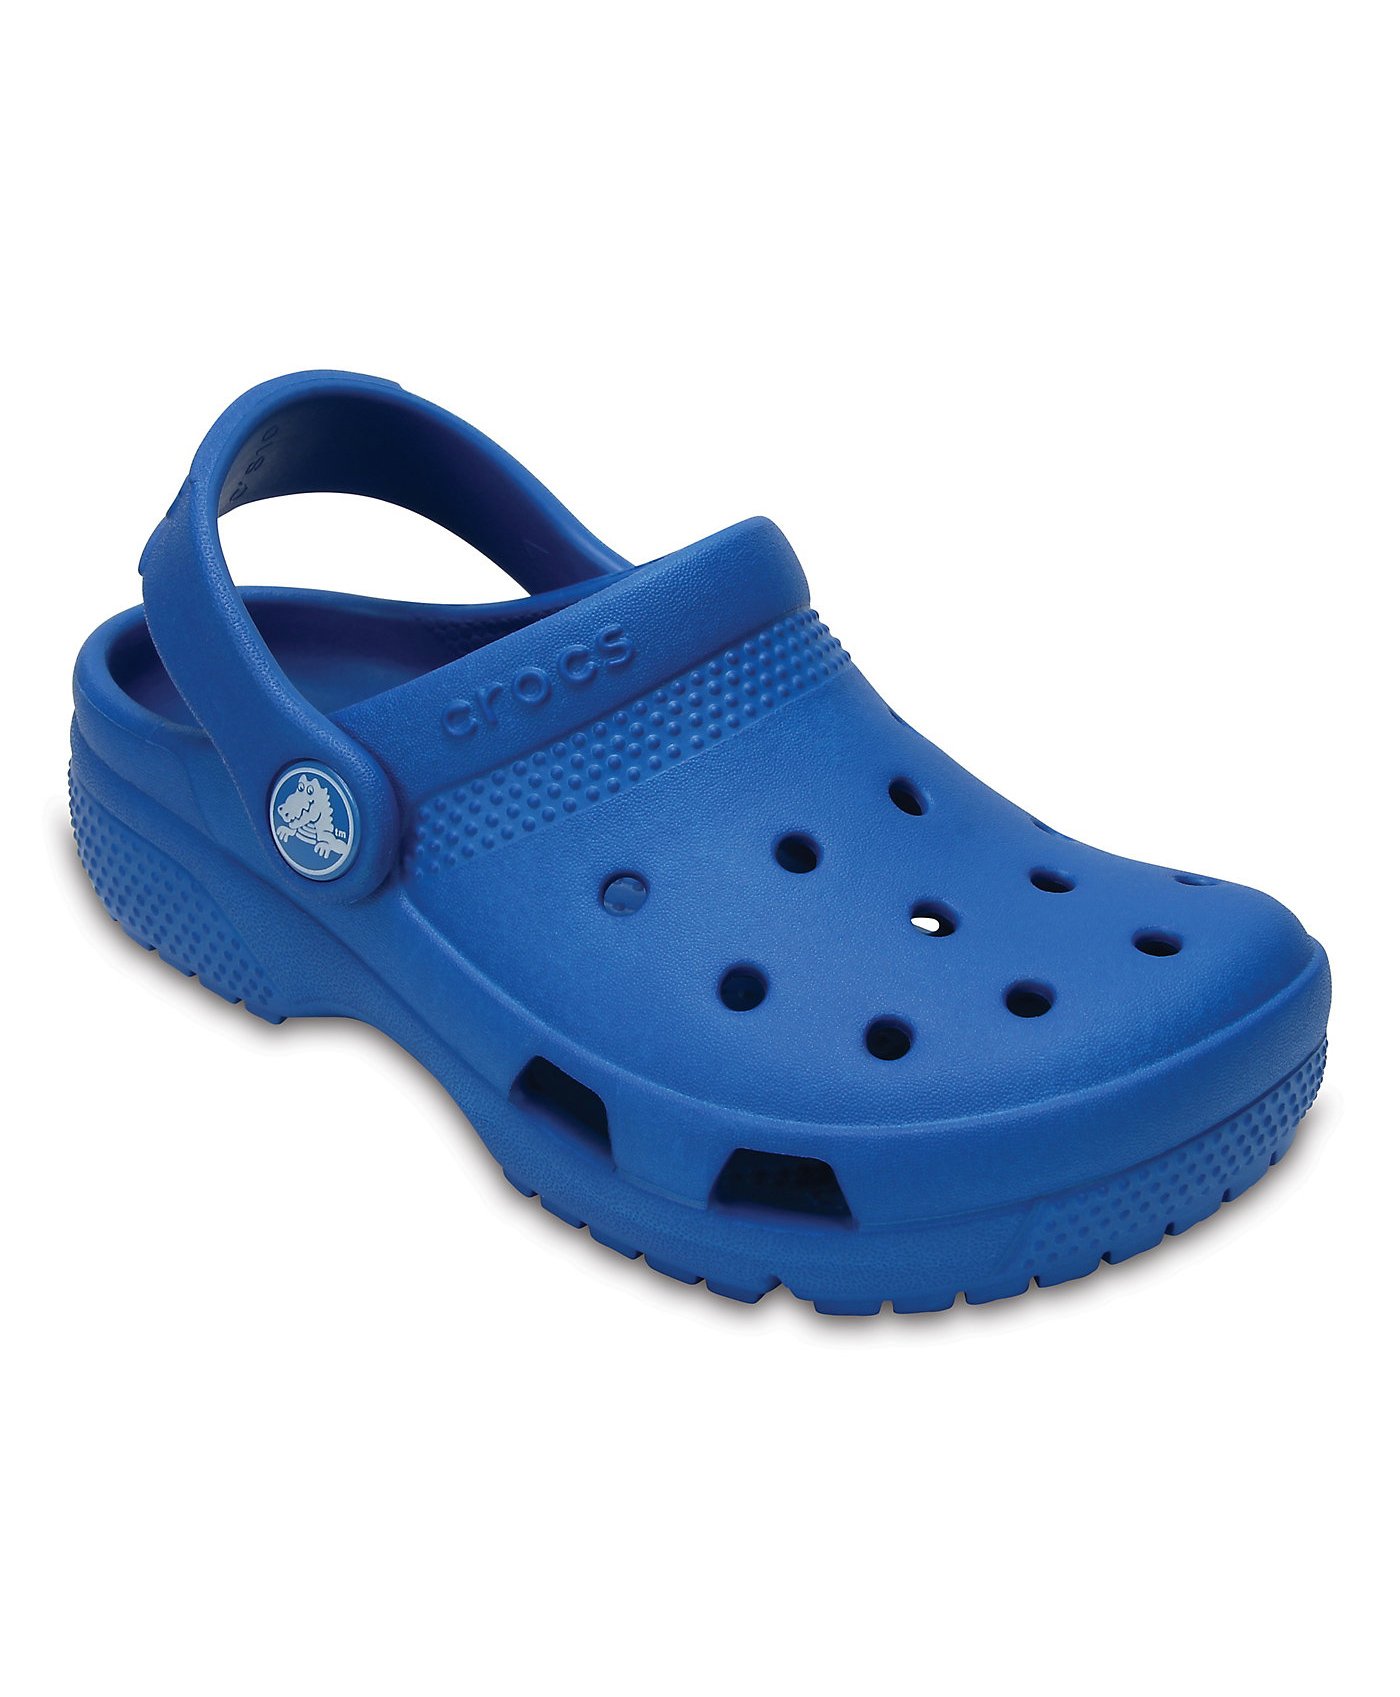 Buy Crocs Coast Clog - Dark Blue for 